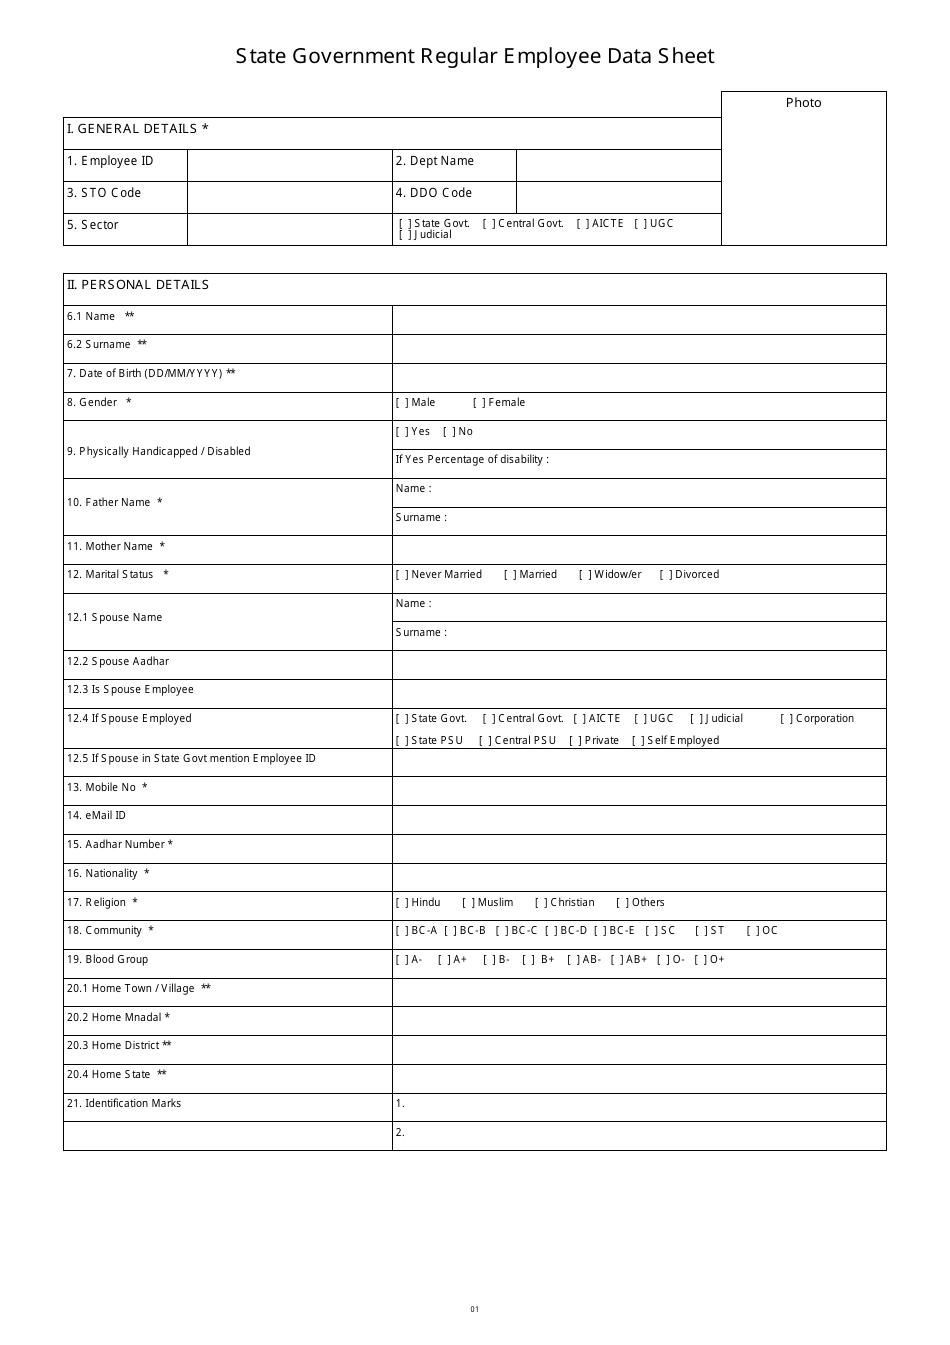 State Government Regular Employee Data Sheet - Telangana, India, Page 1